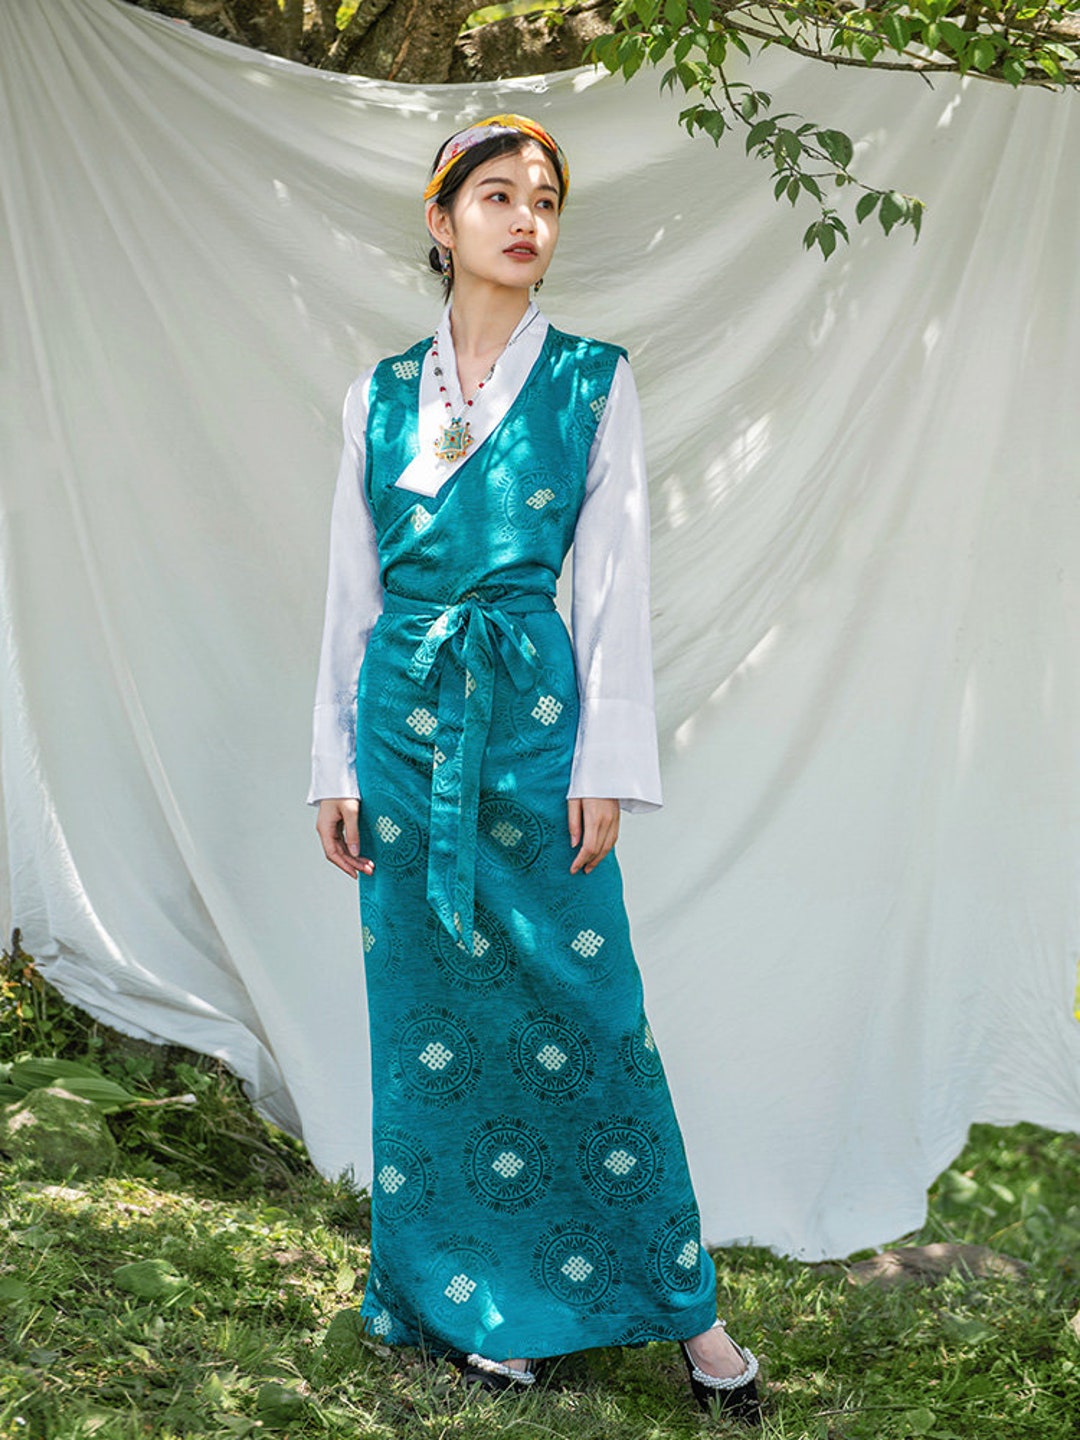 Folkwear #131 Tibetan Chupa Jumper Skirt Dress Tibet Traditional Sewing  Pattern (Pattern Only) folkwear131 : Amazon.in: Home & Kitchen